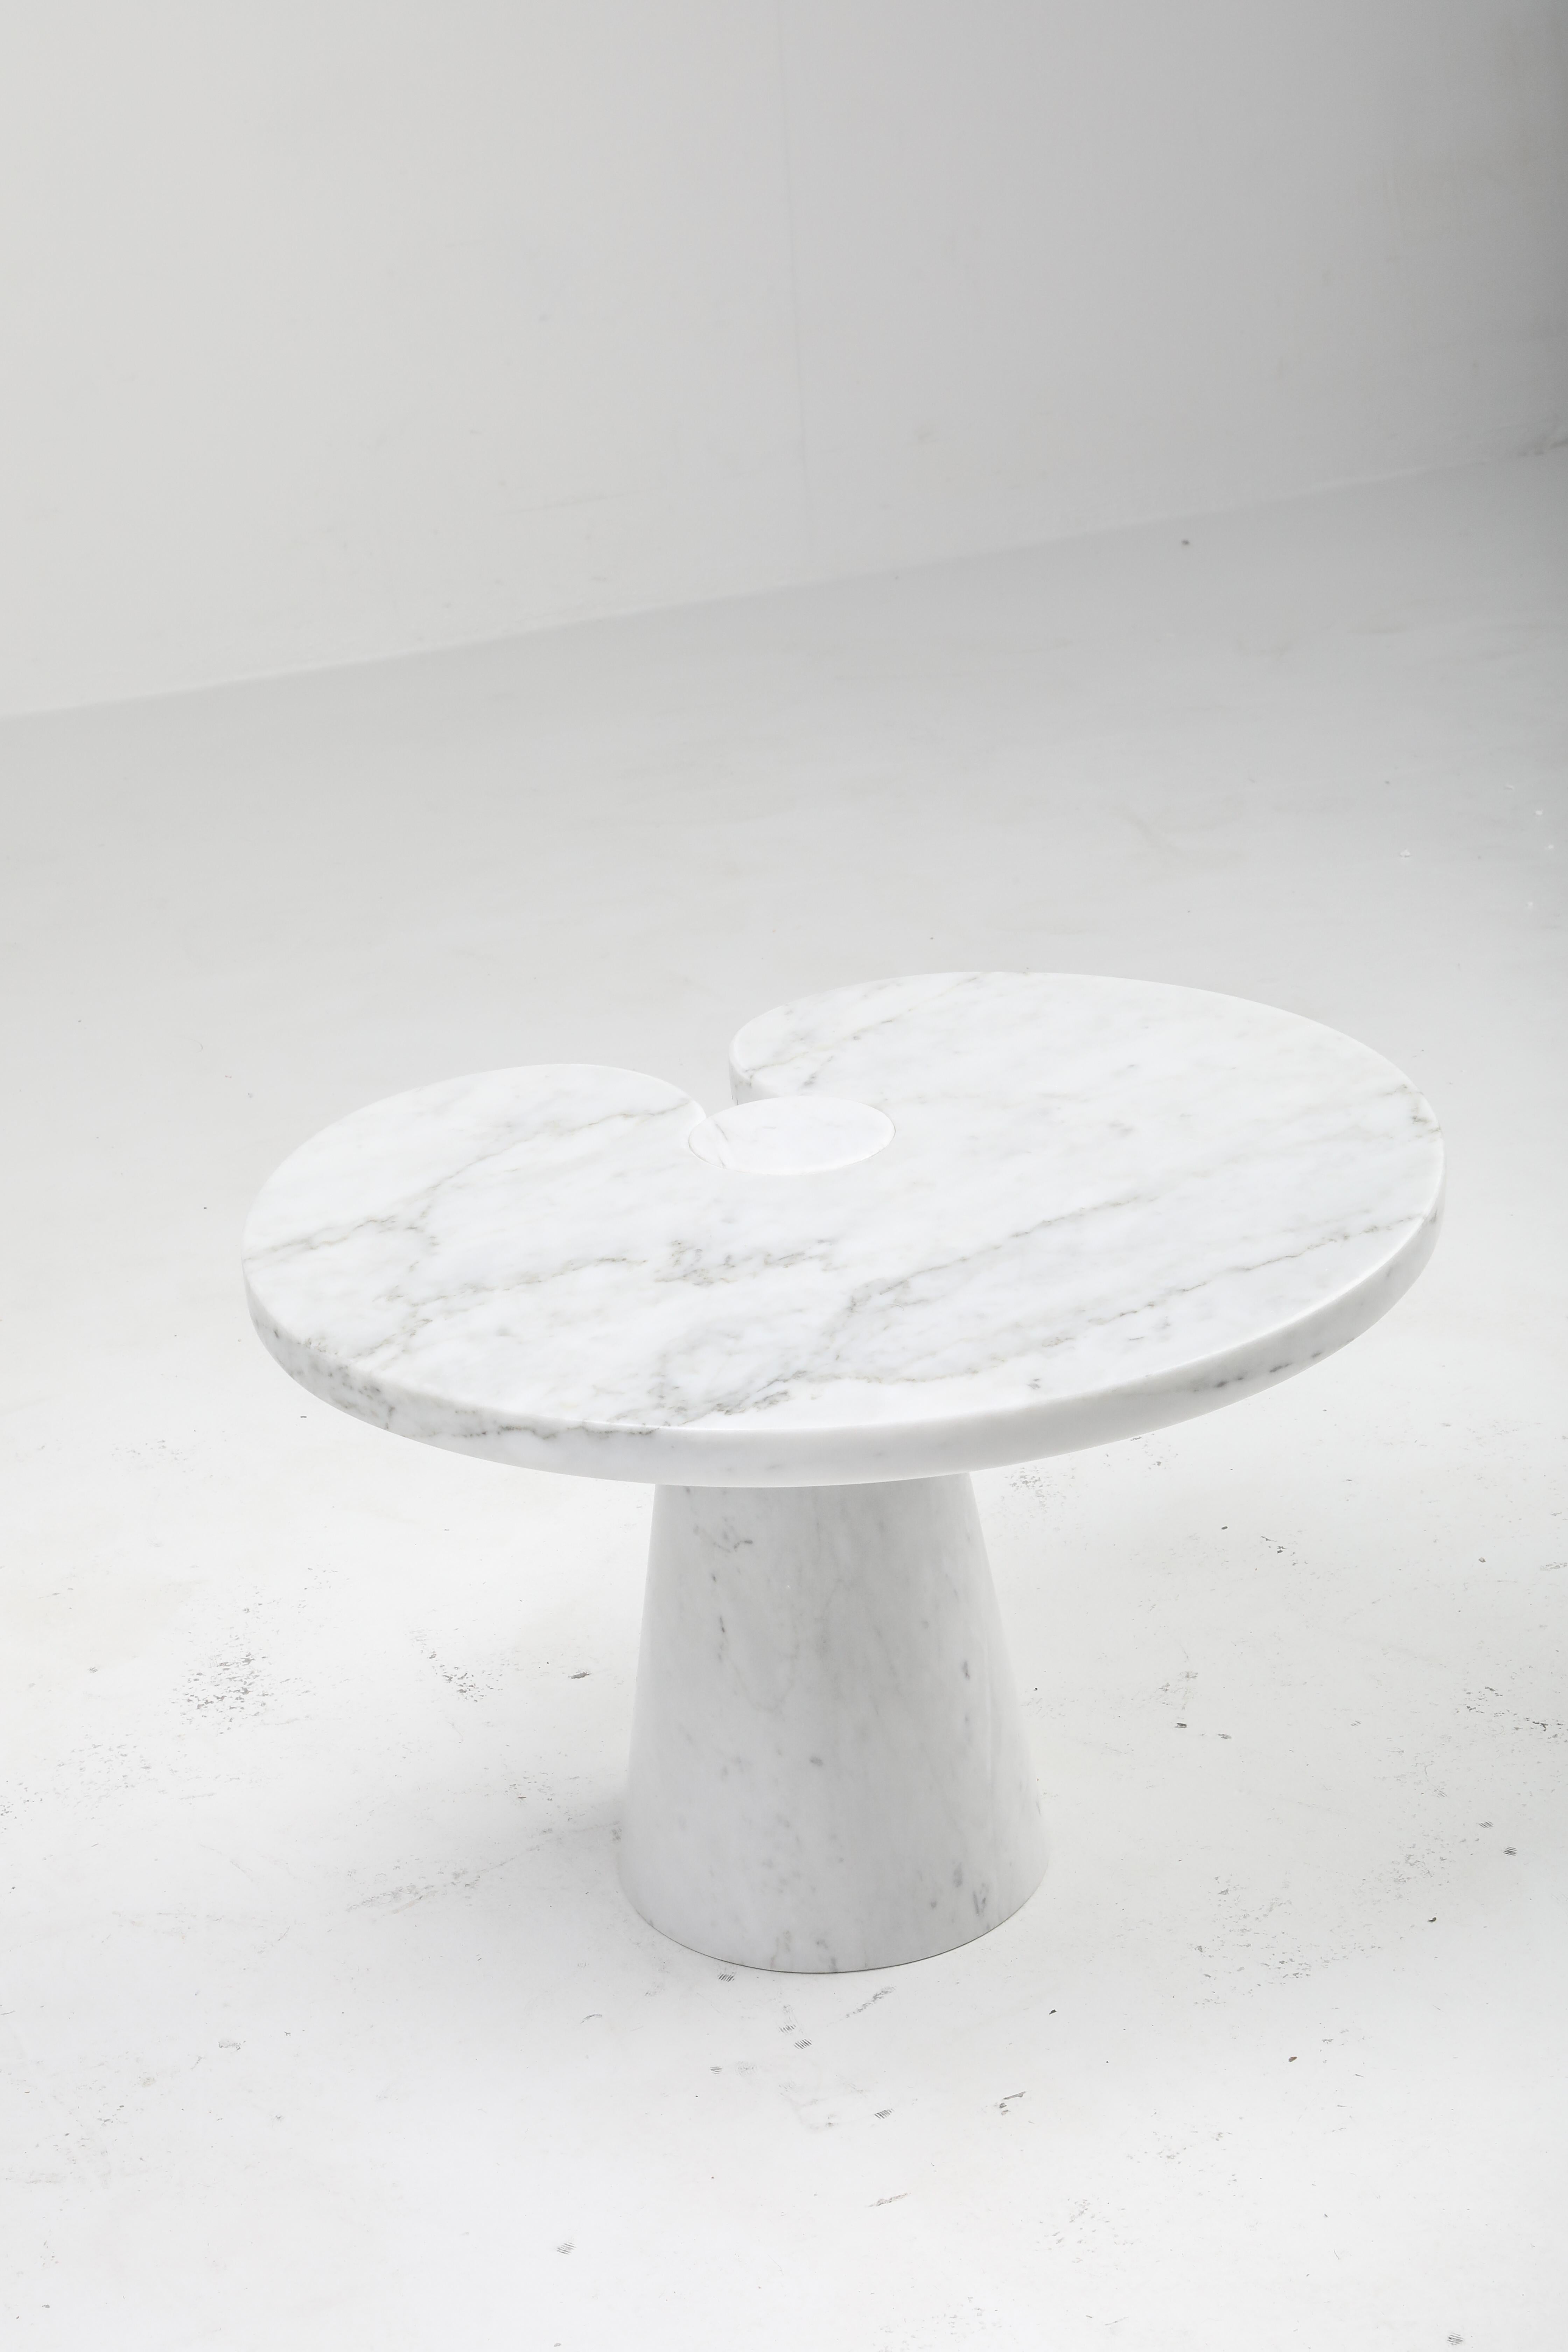 European Eros White Carrara Marble Side Table by Angelo Mangiarotti for Skipper, Italy